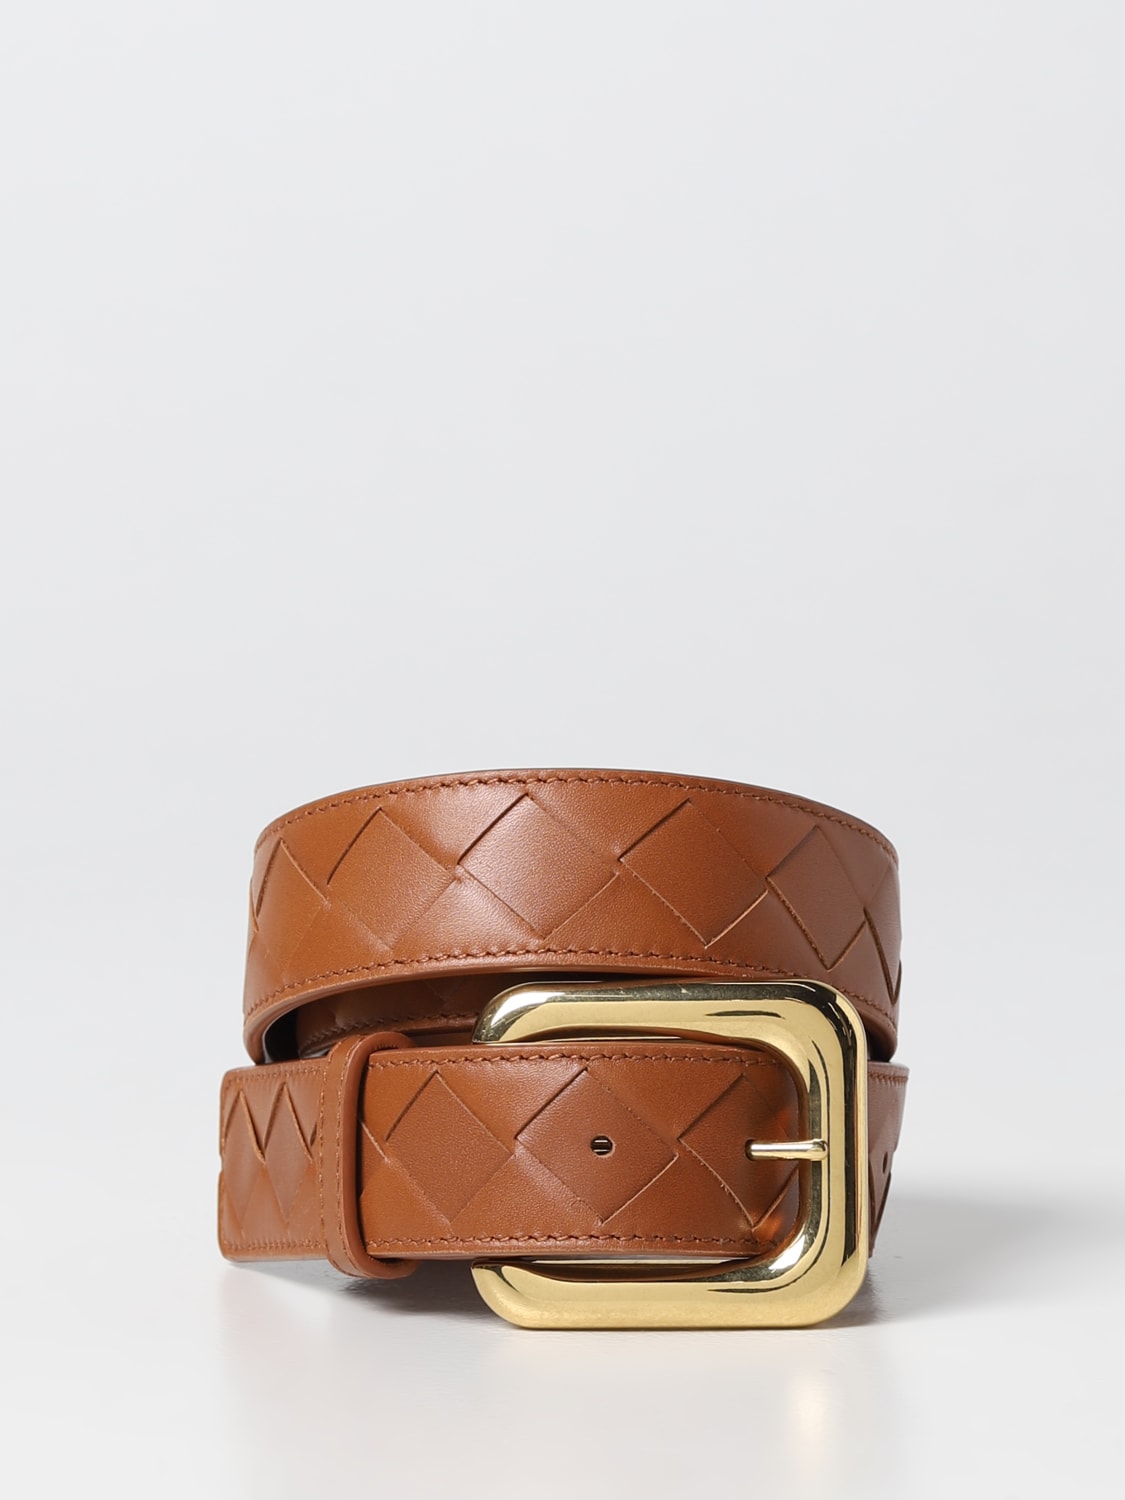 Bottega Veneta belt in woven leather